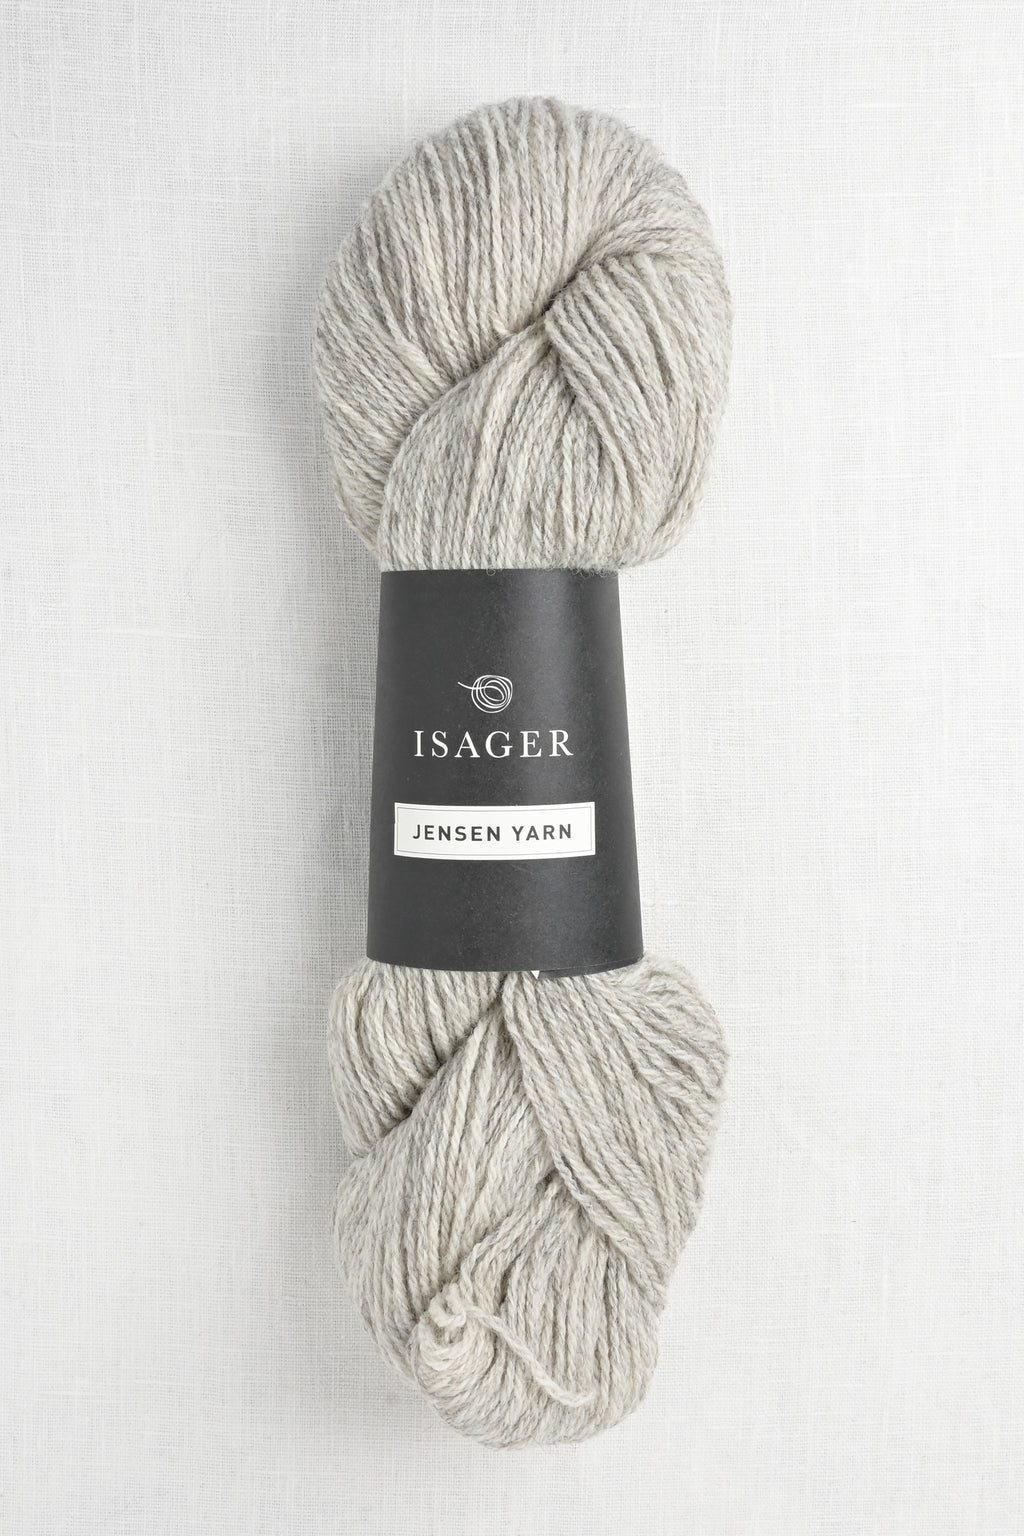 isager jensen yarn 2s light grey